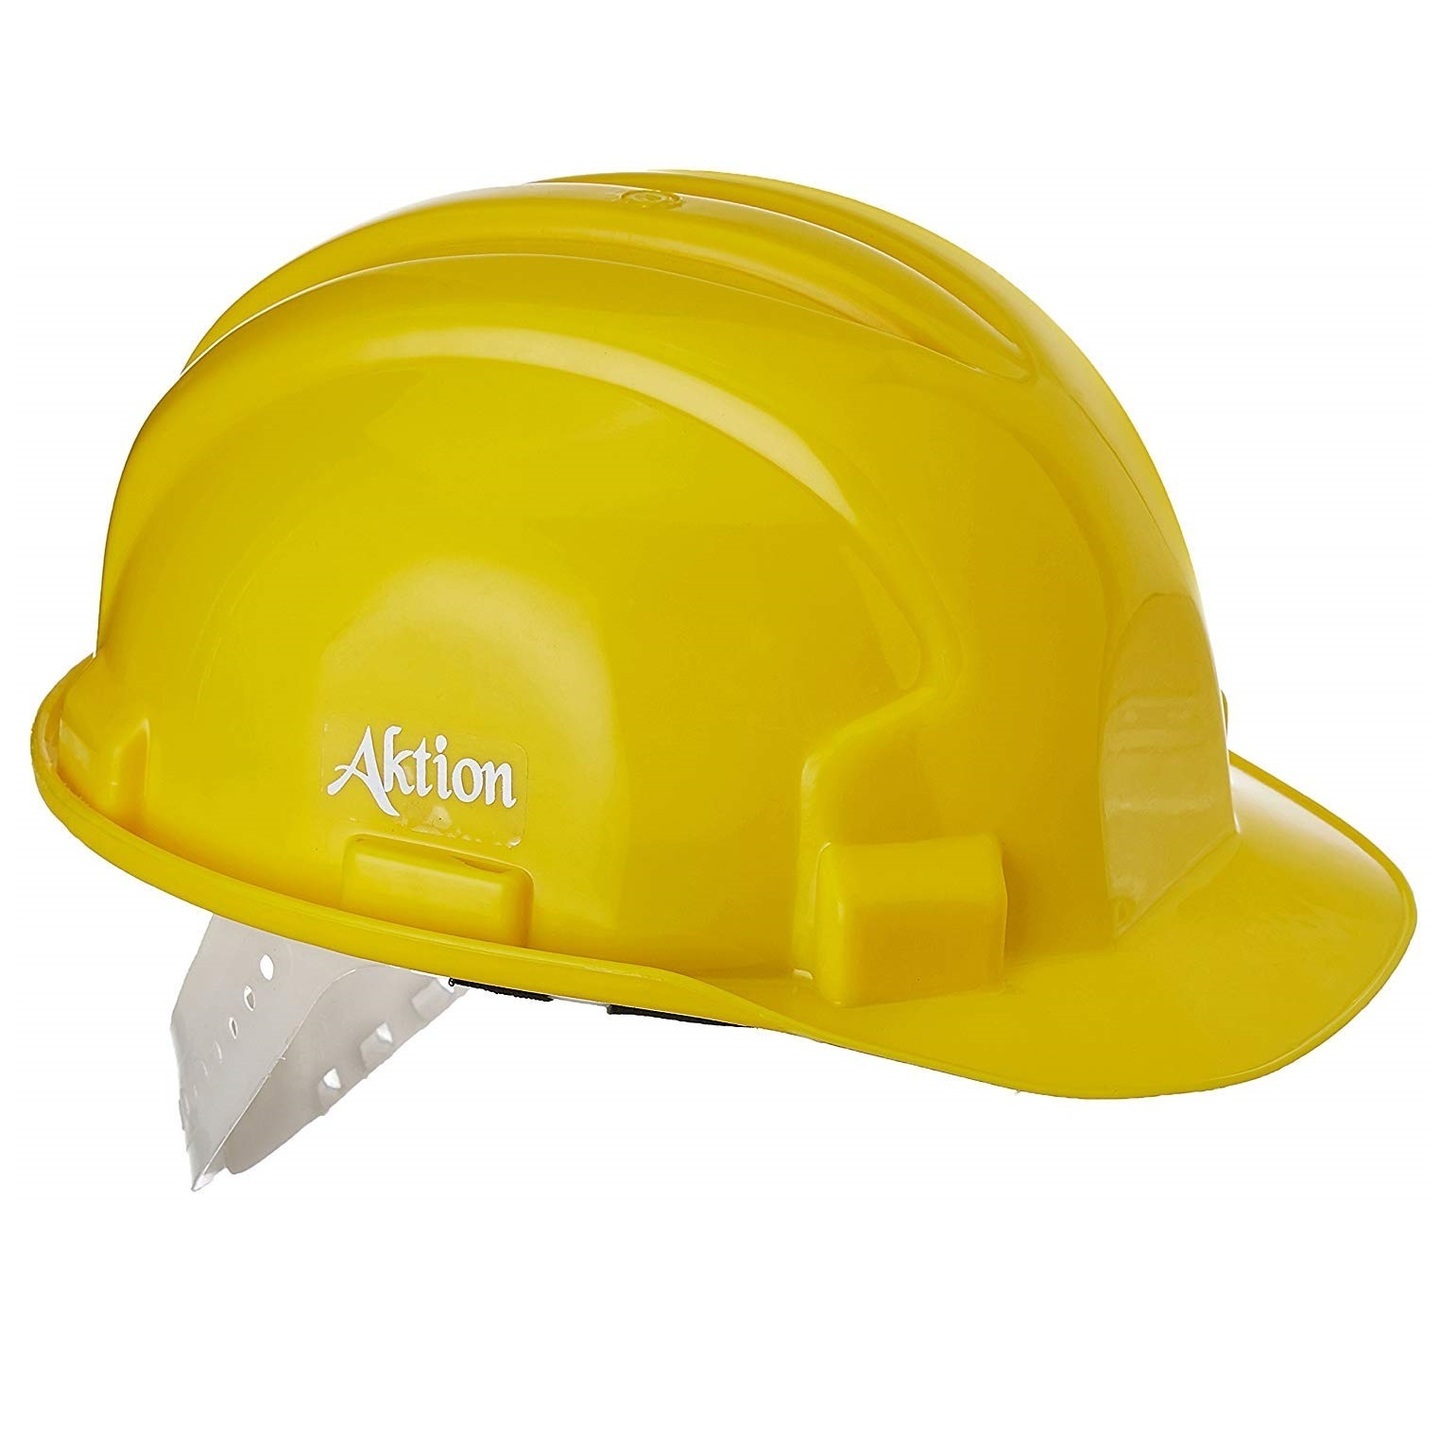 Aktion Safety Helmet